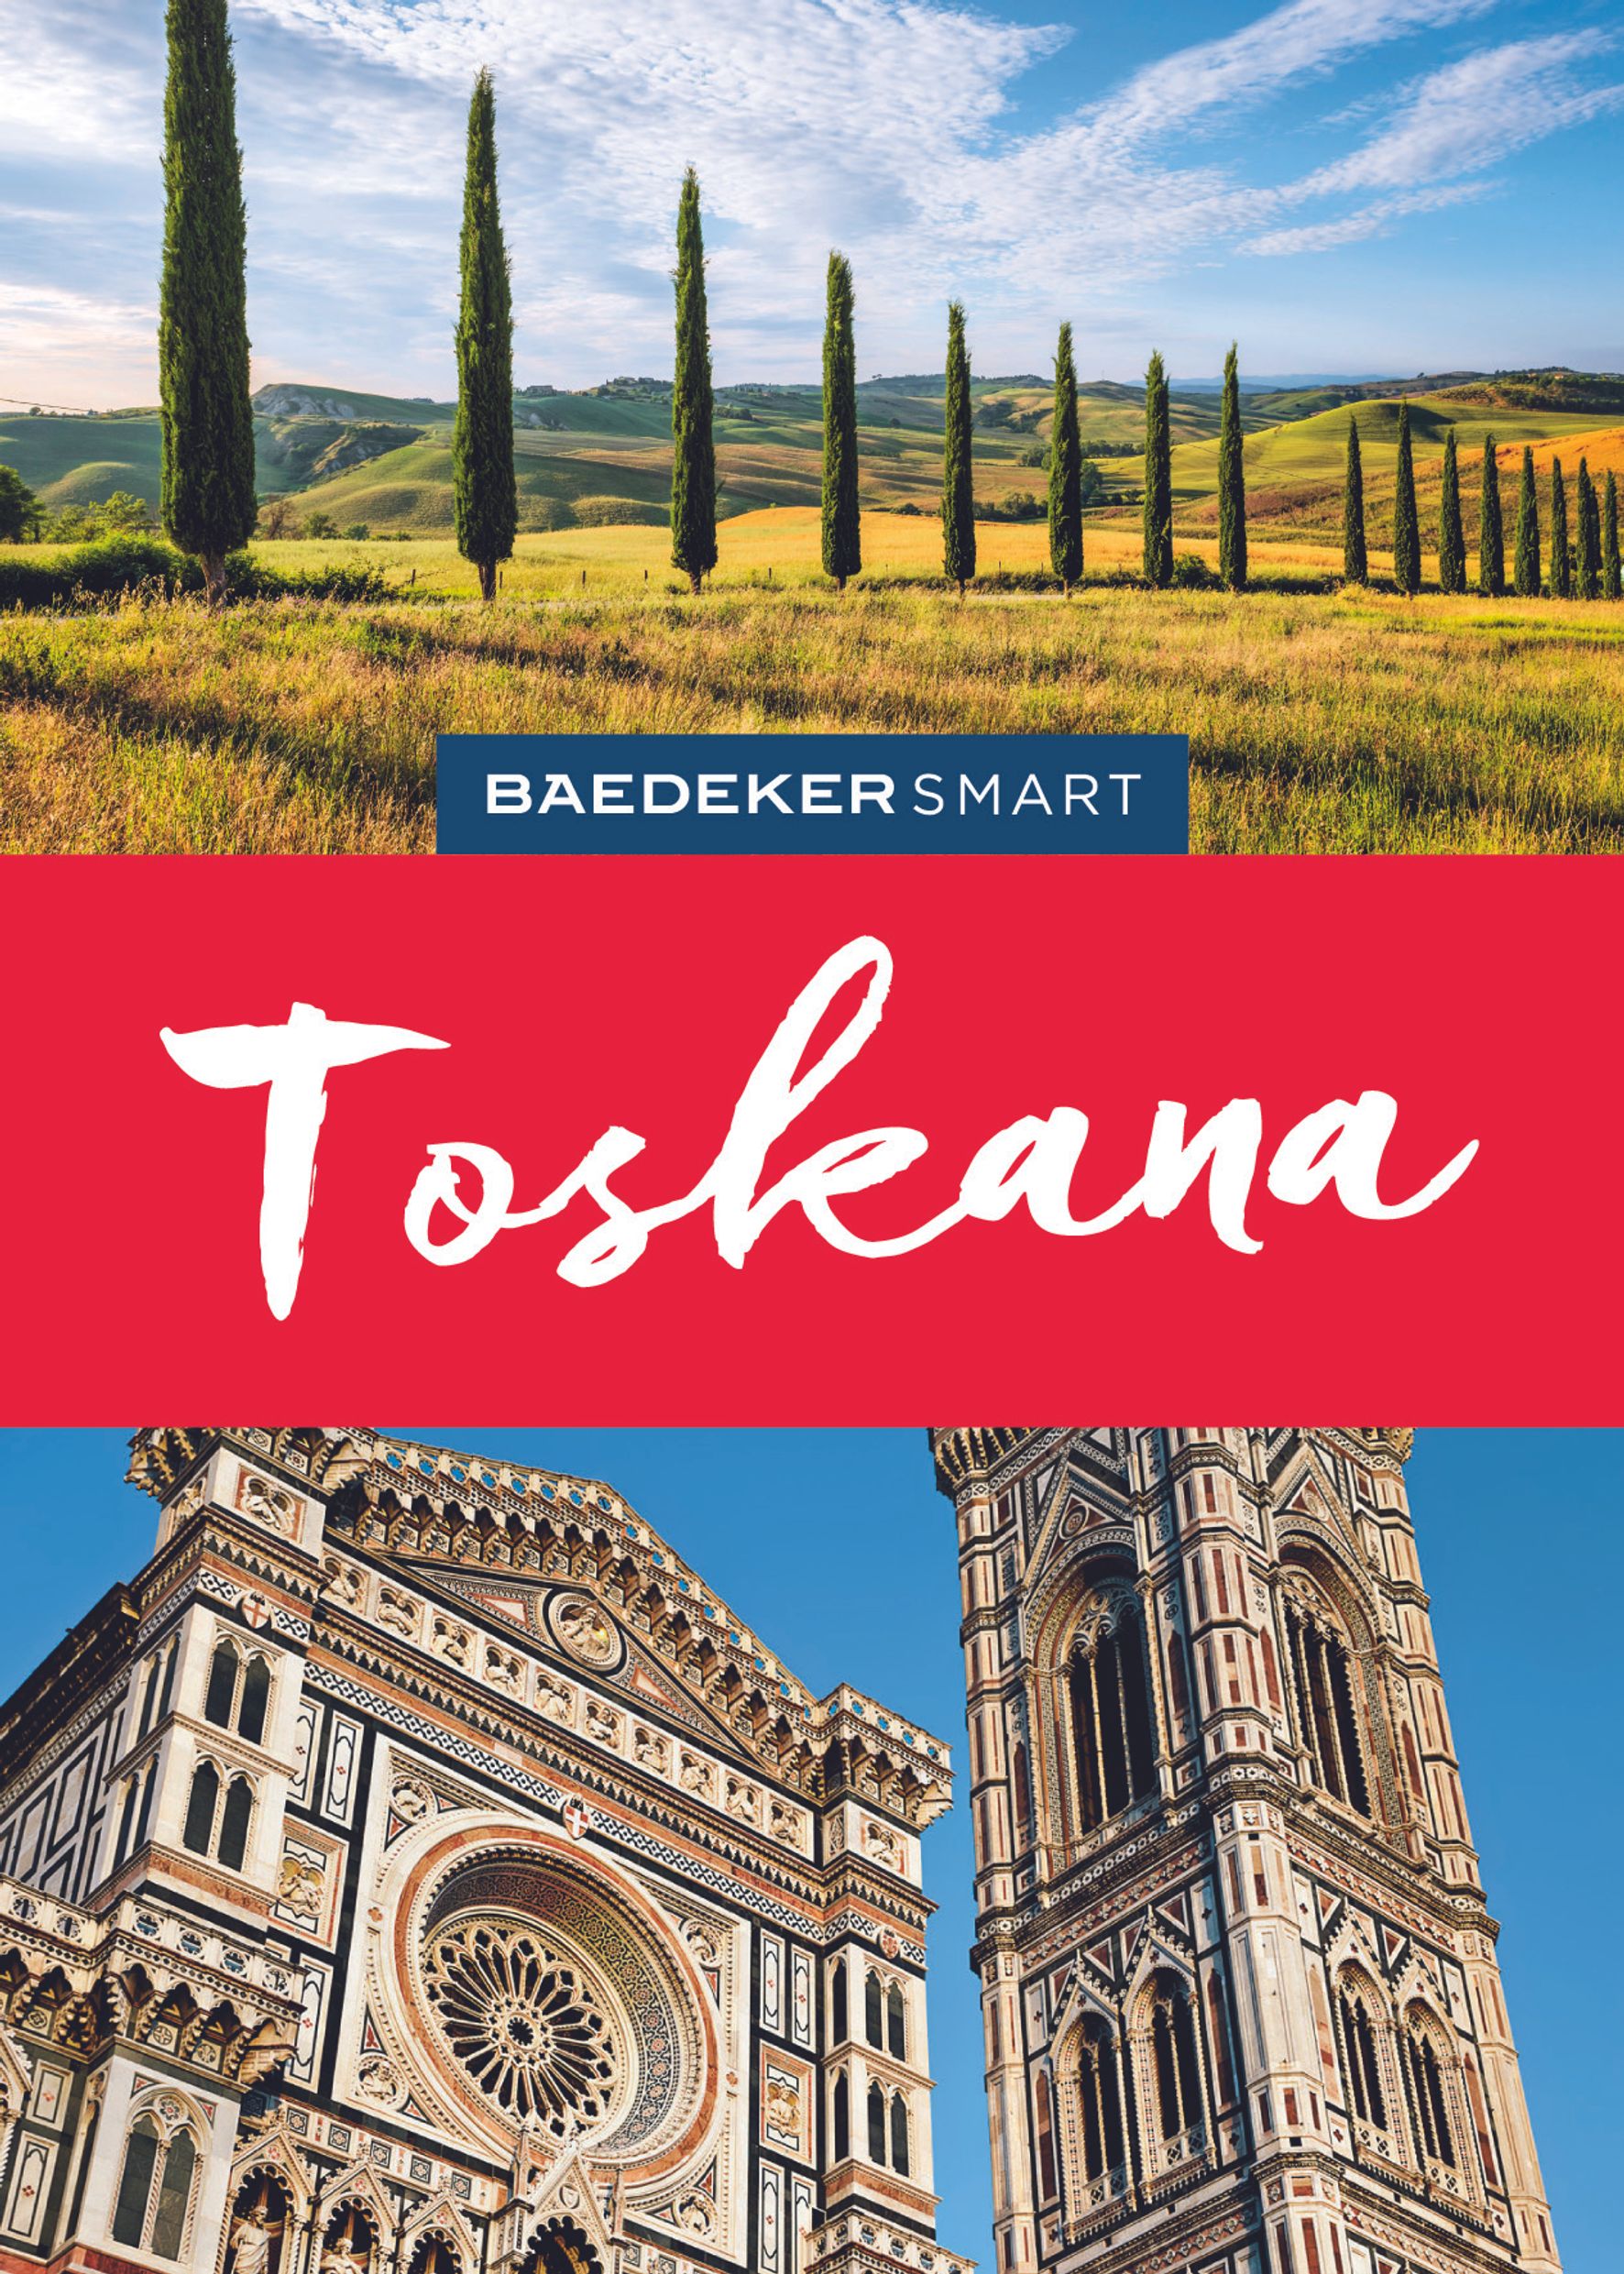 Baedeker Toskana (eBook)